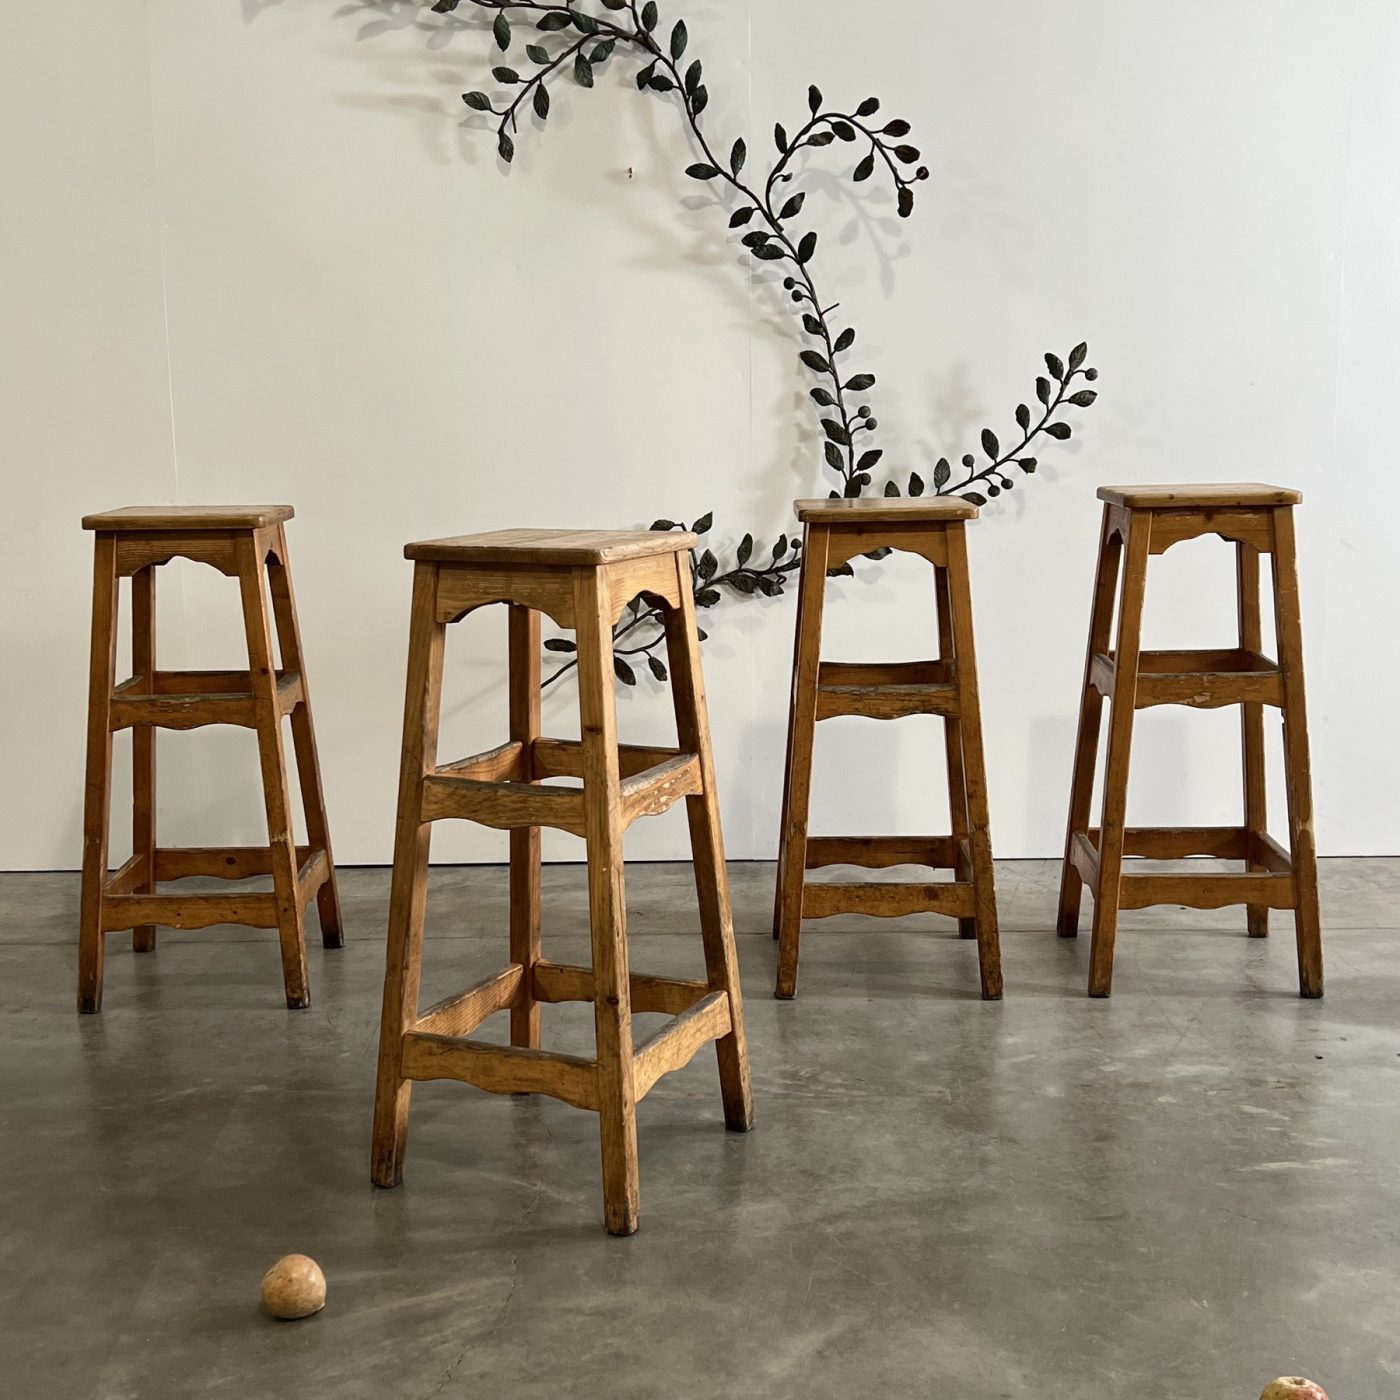 objet-vagabond-artist-stools0000